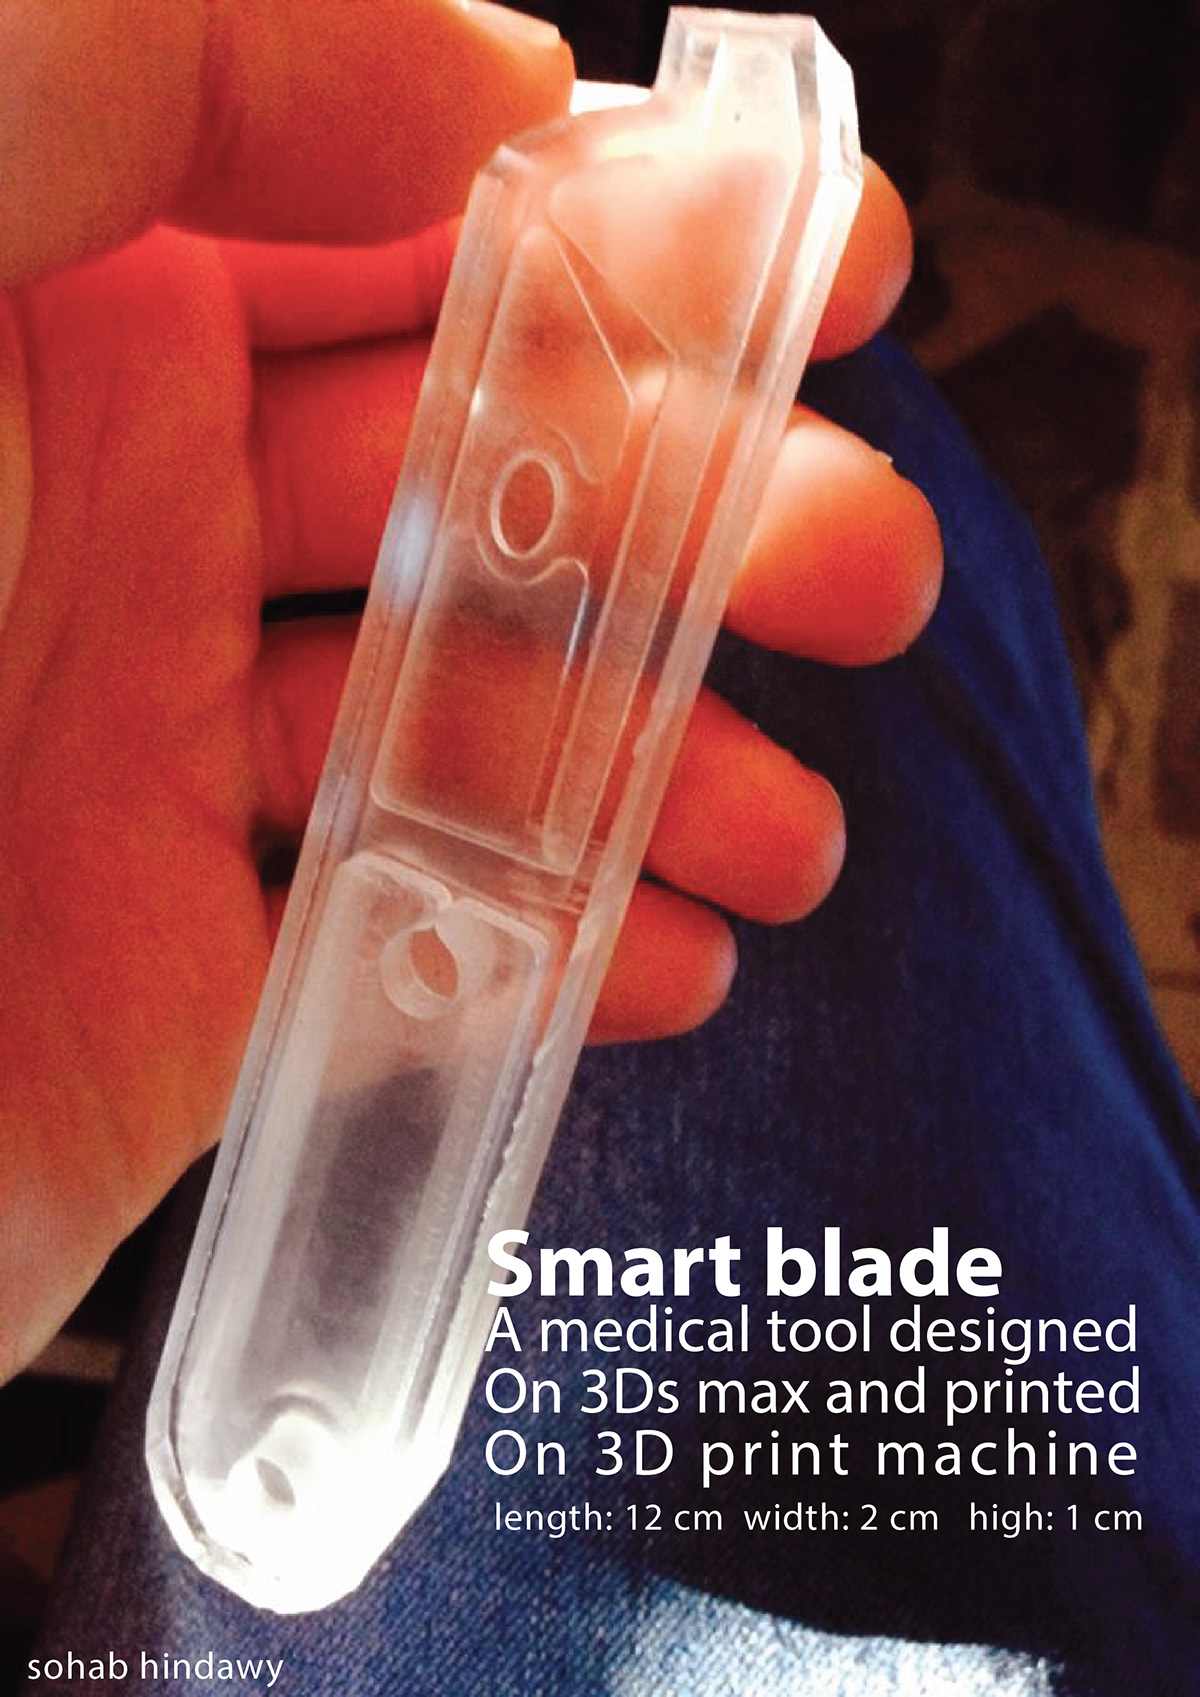 length: 12 cm width: 2 cm high: 1 cm A medical tool